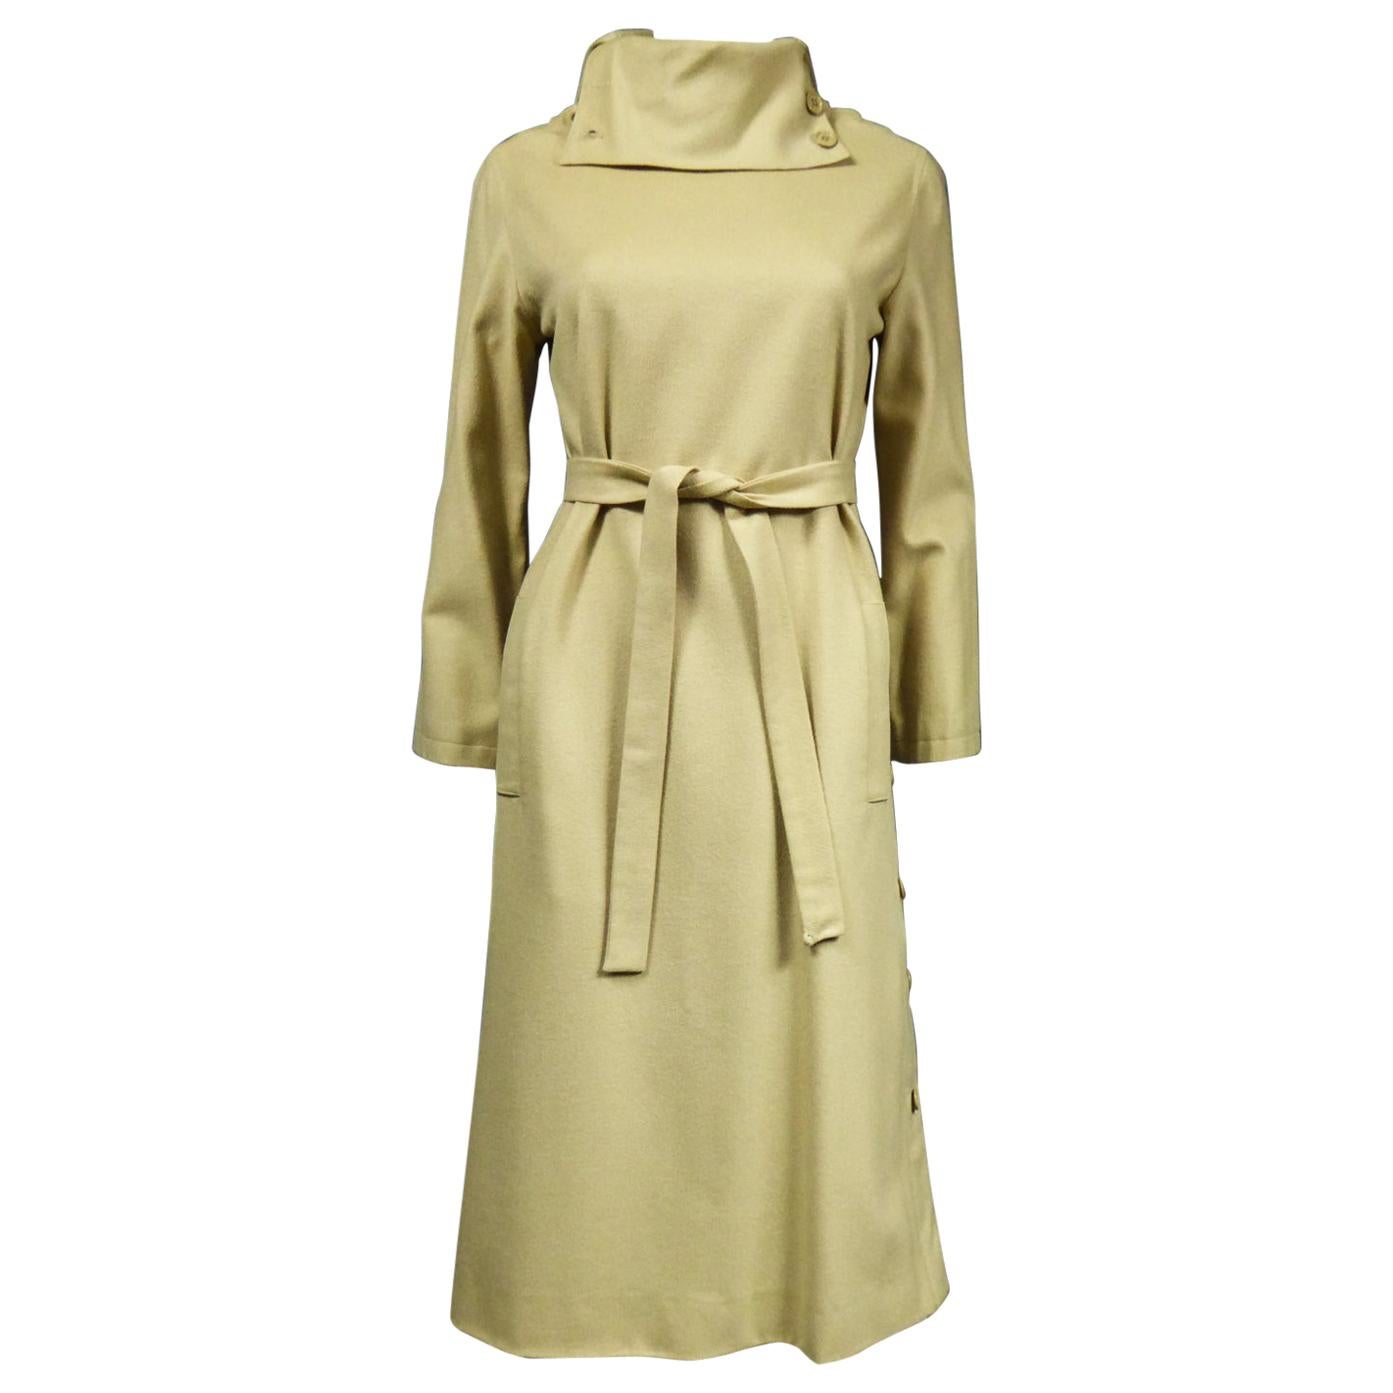 A Pierre Cardin Woollen Dress (attributed to) Circa 1980